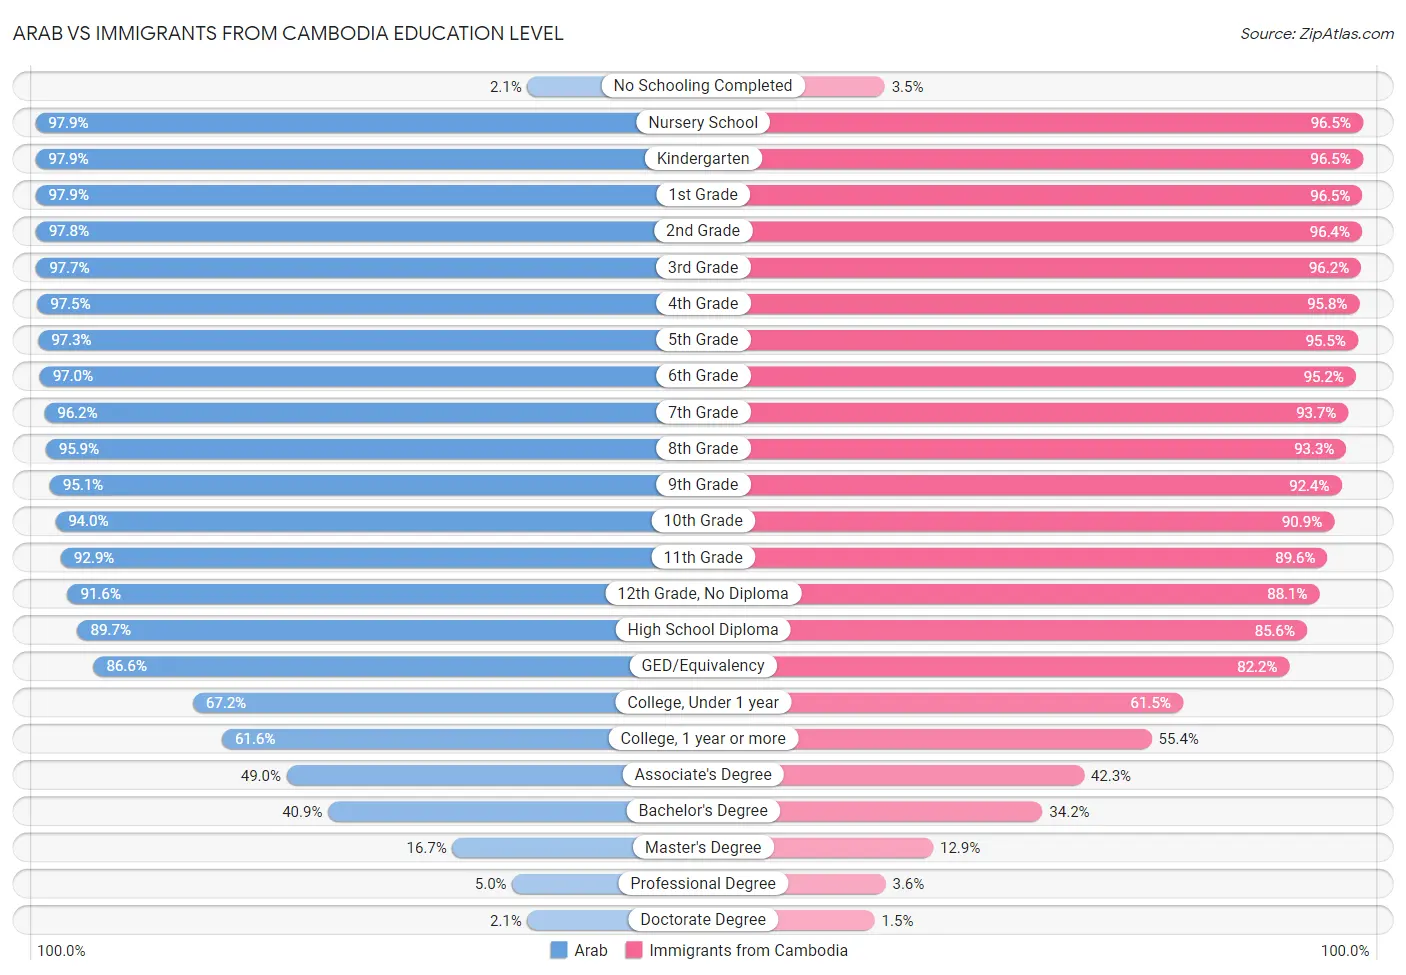 Arab vs Immigrants from Cambodia Education Level